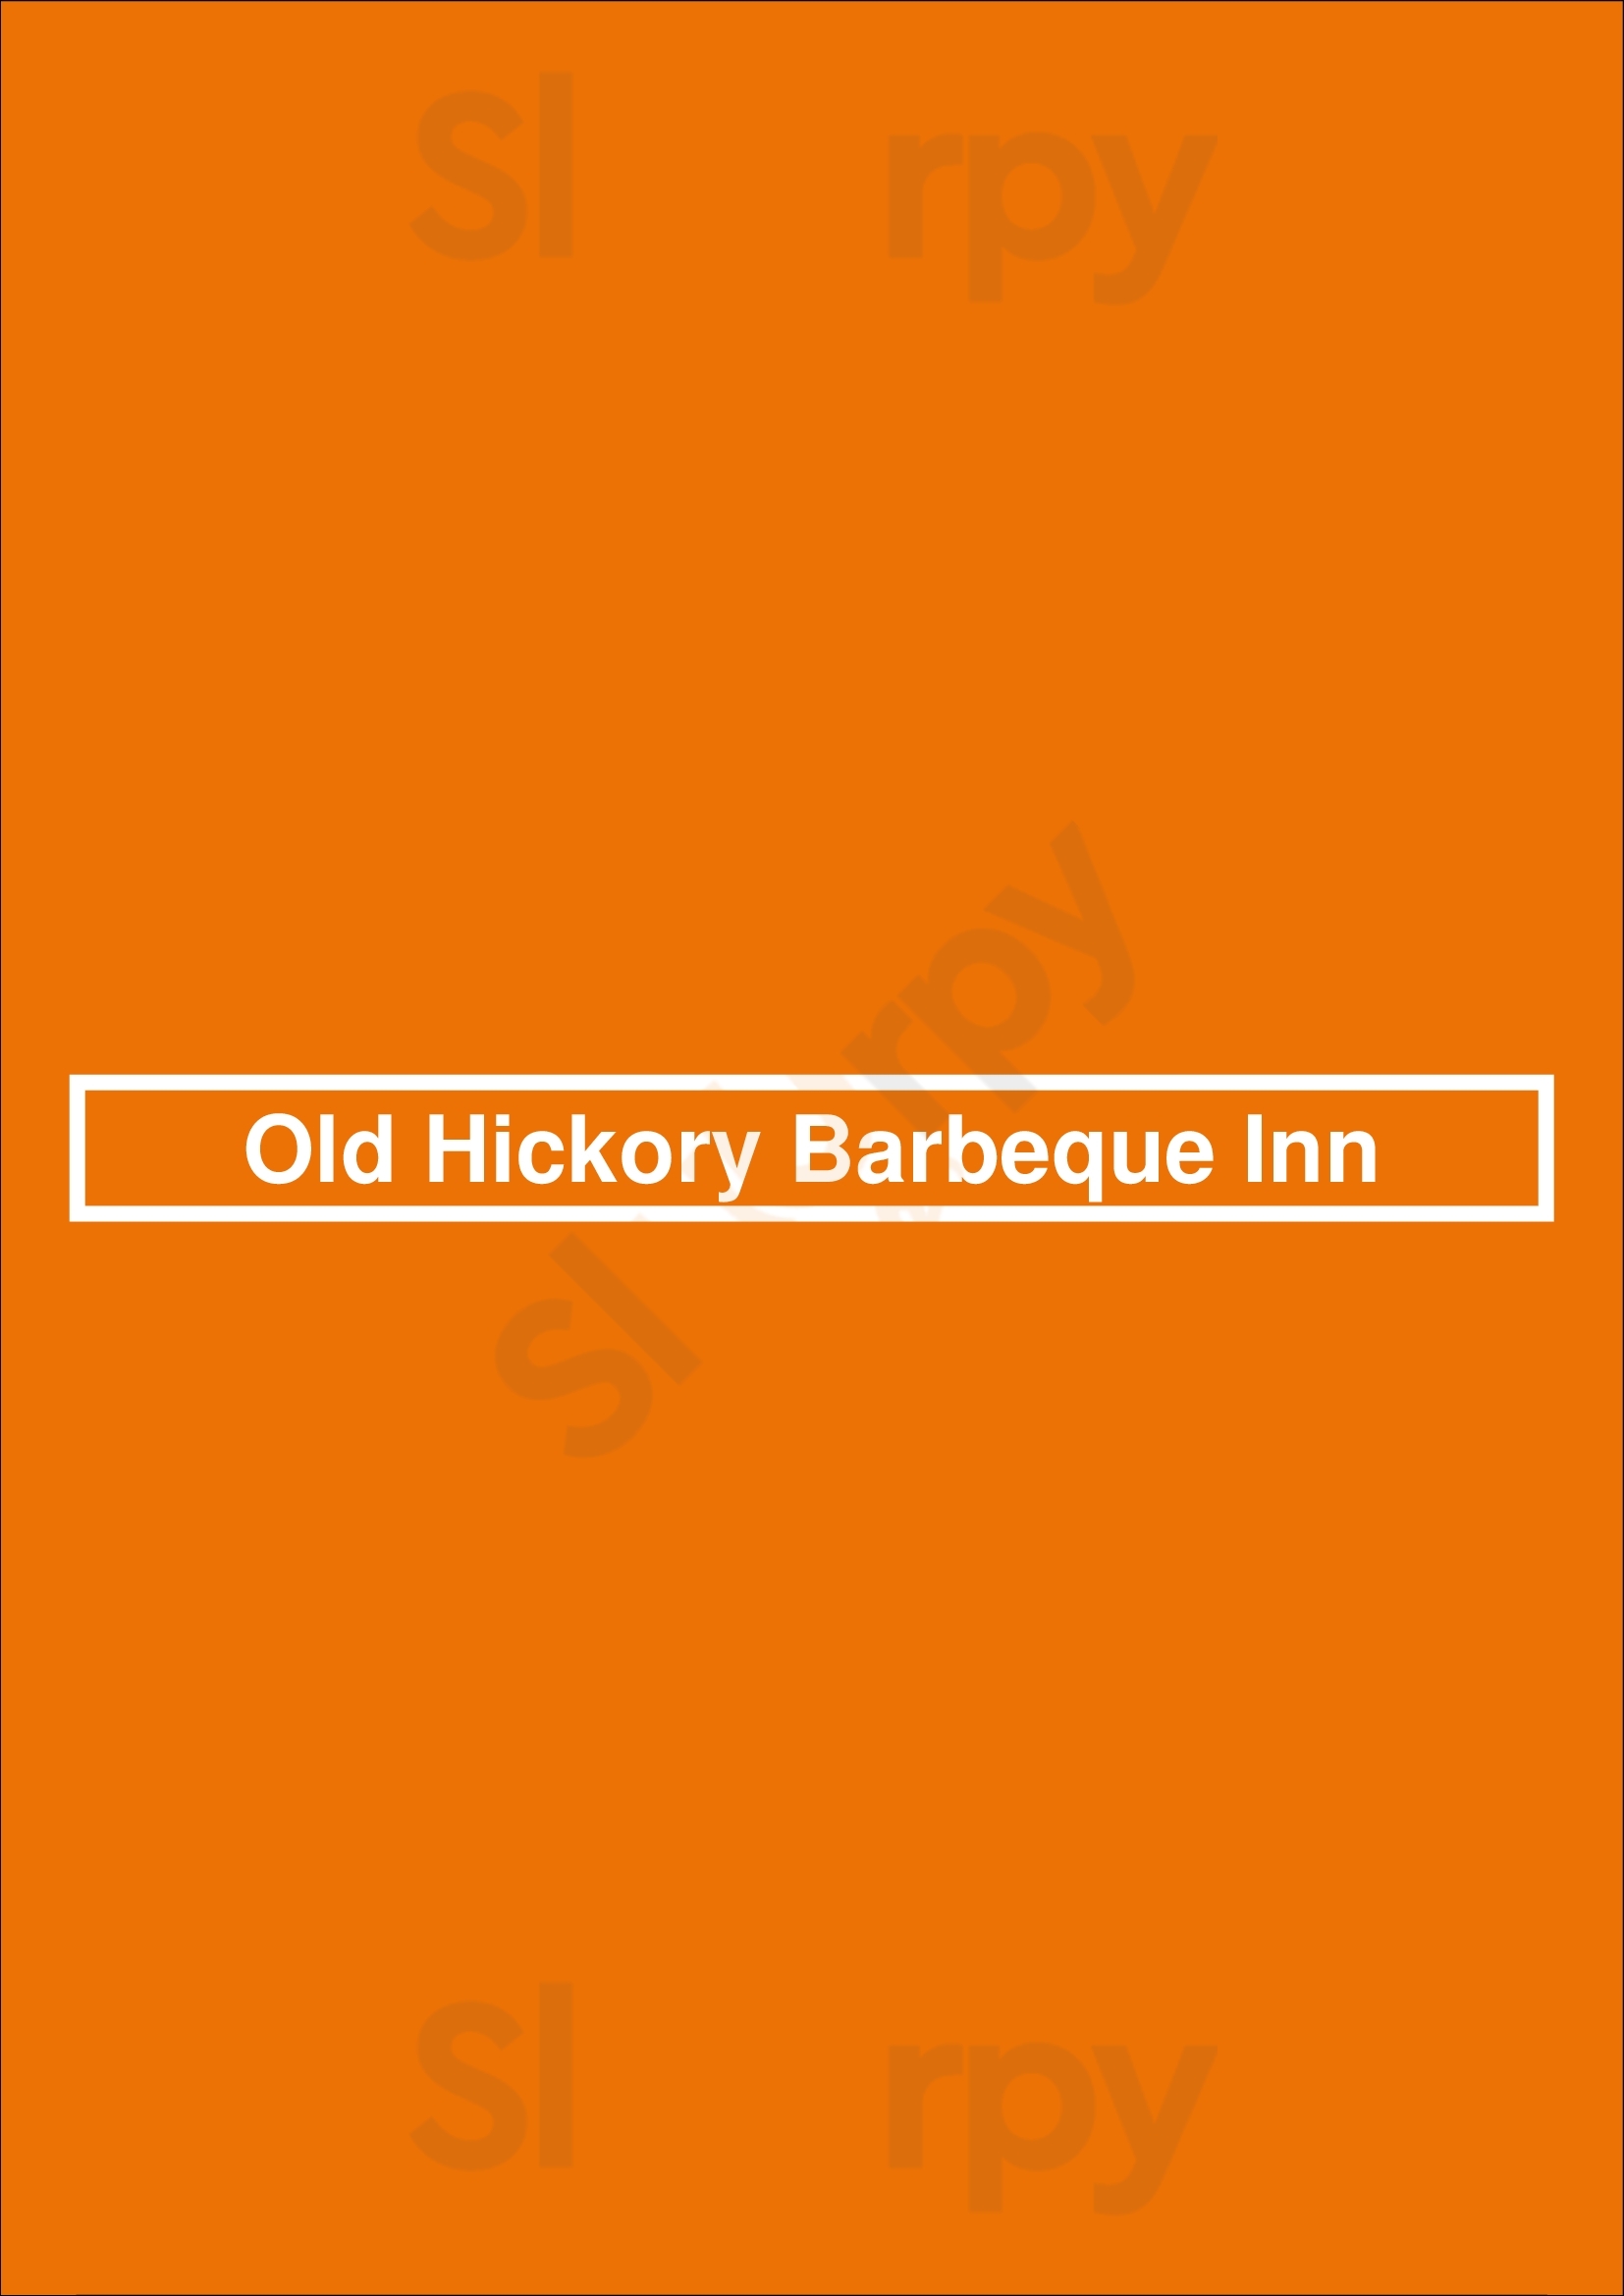 Old Hickory Barbeque Inn Houston Menu - 1